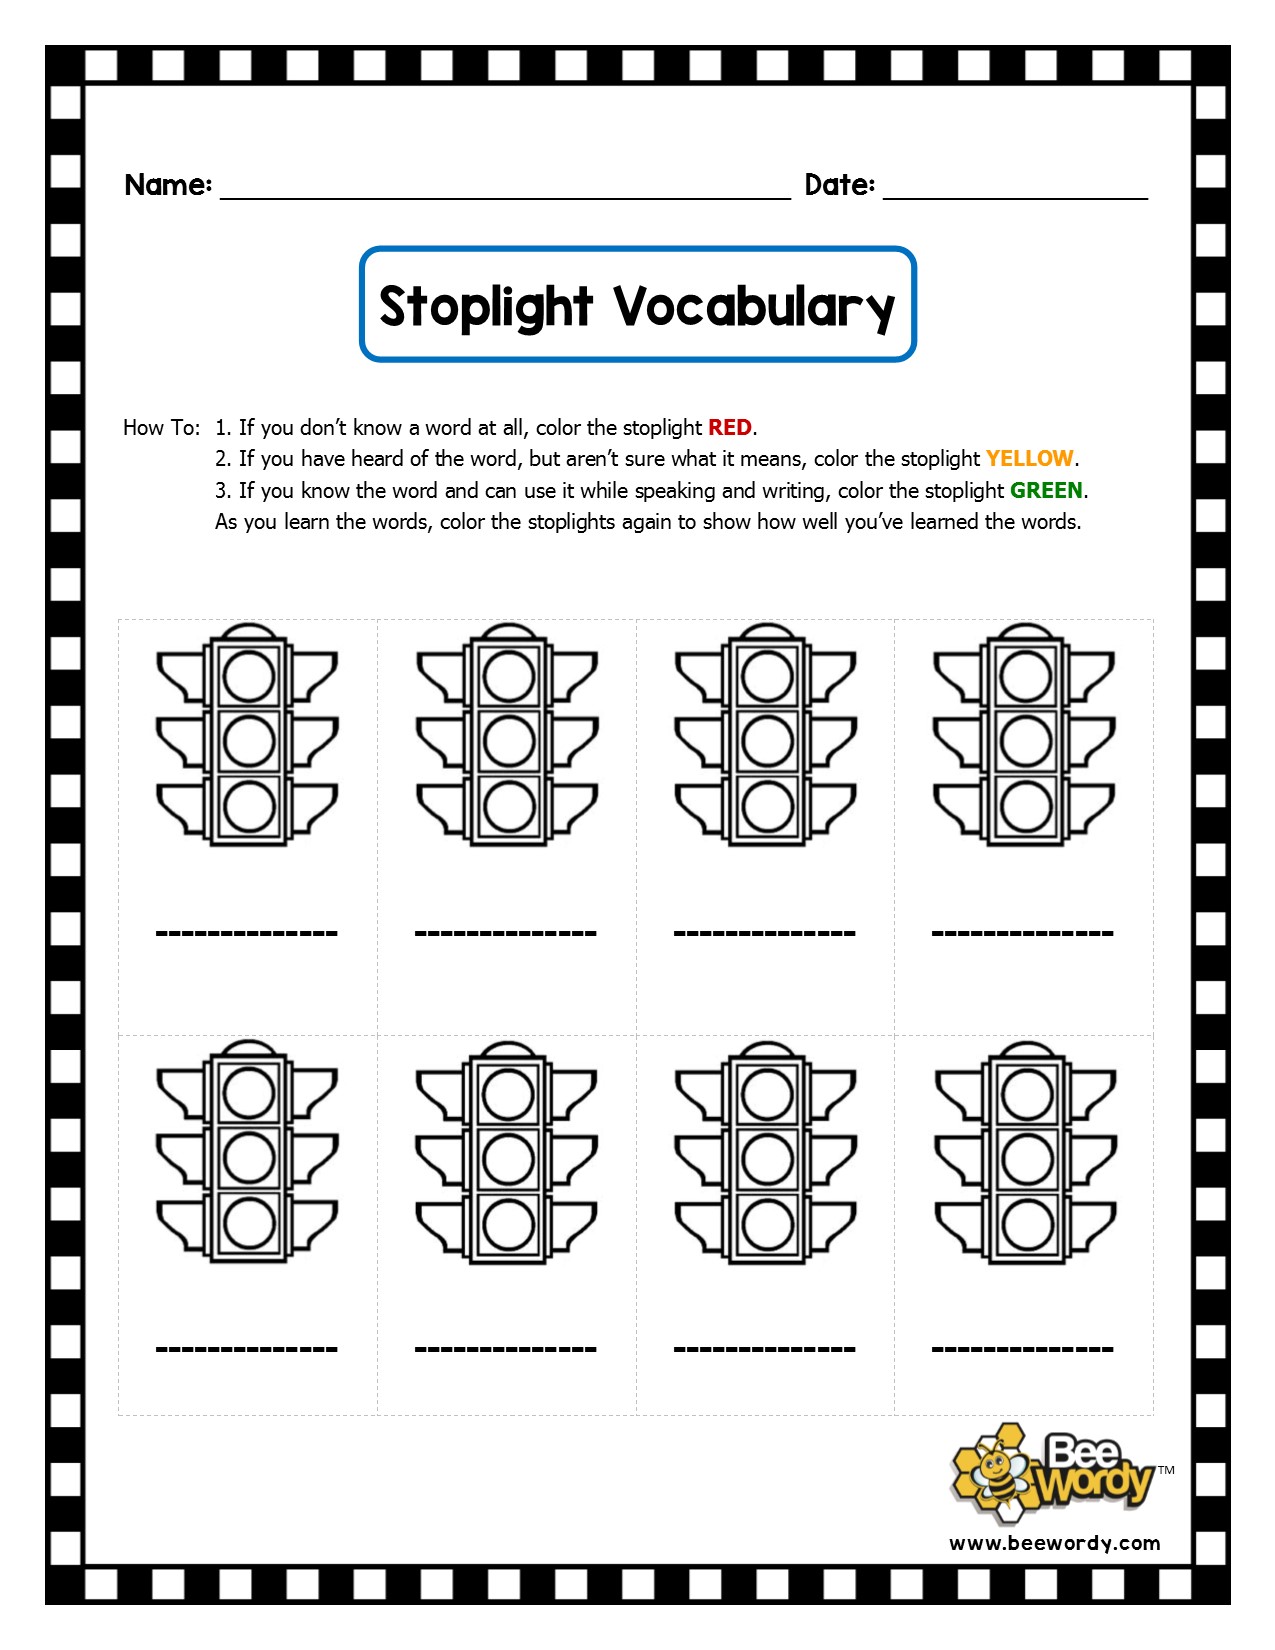 BW Stoplight Vocabulary.jpg